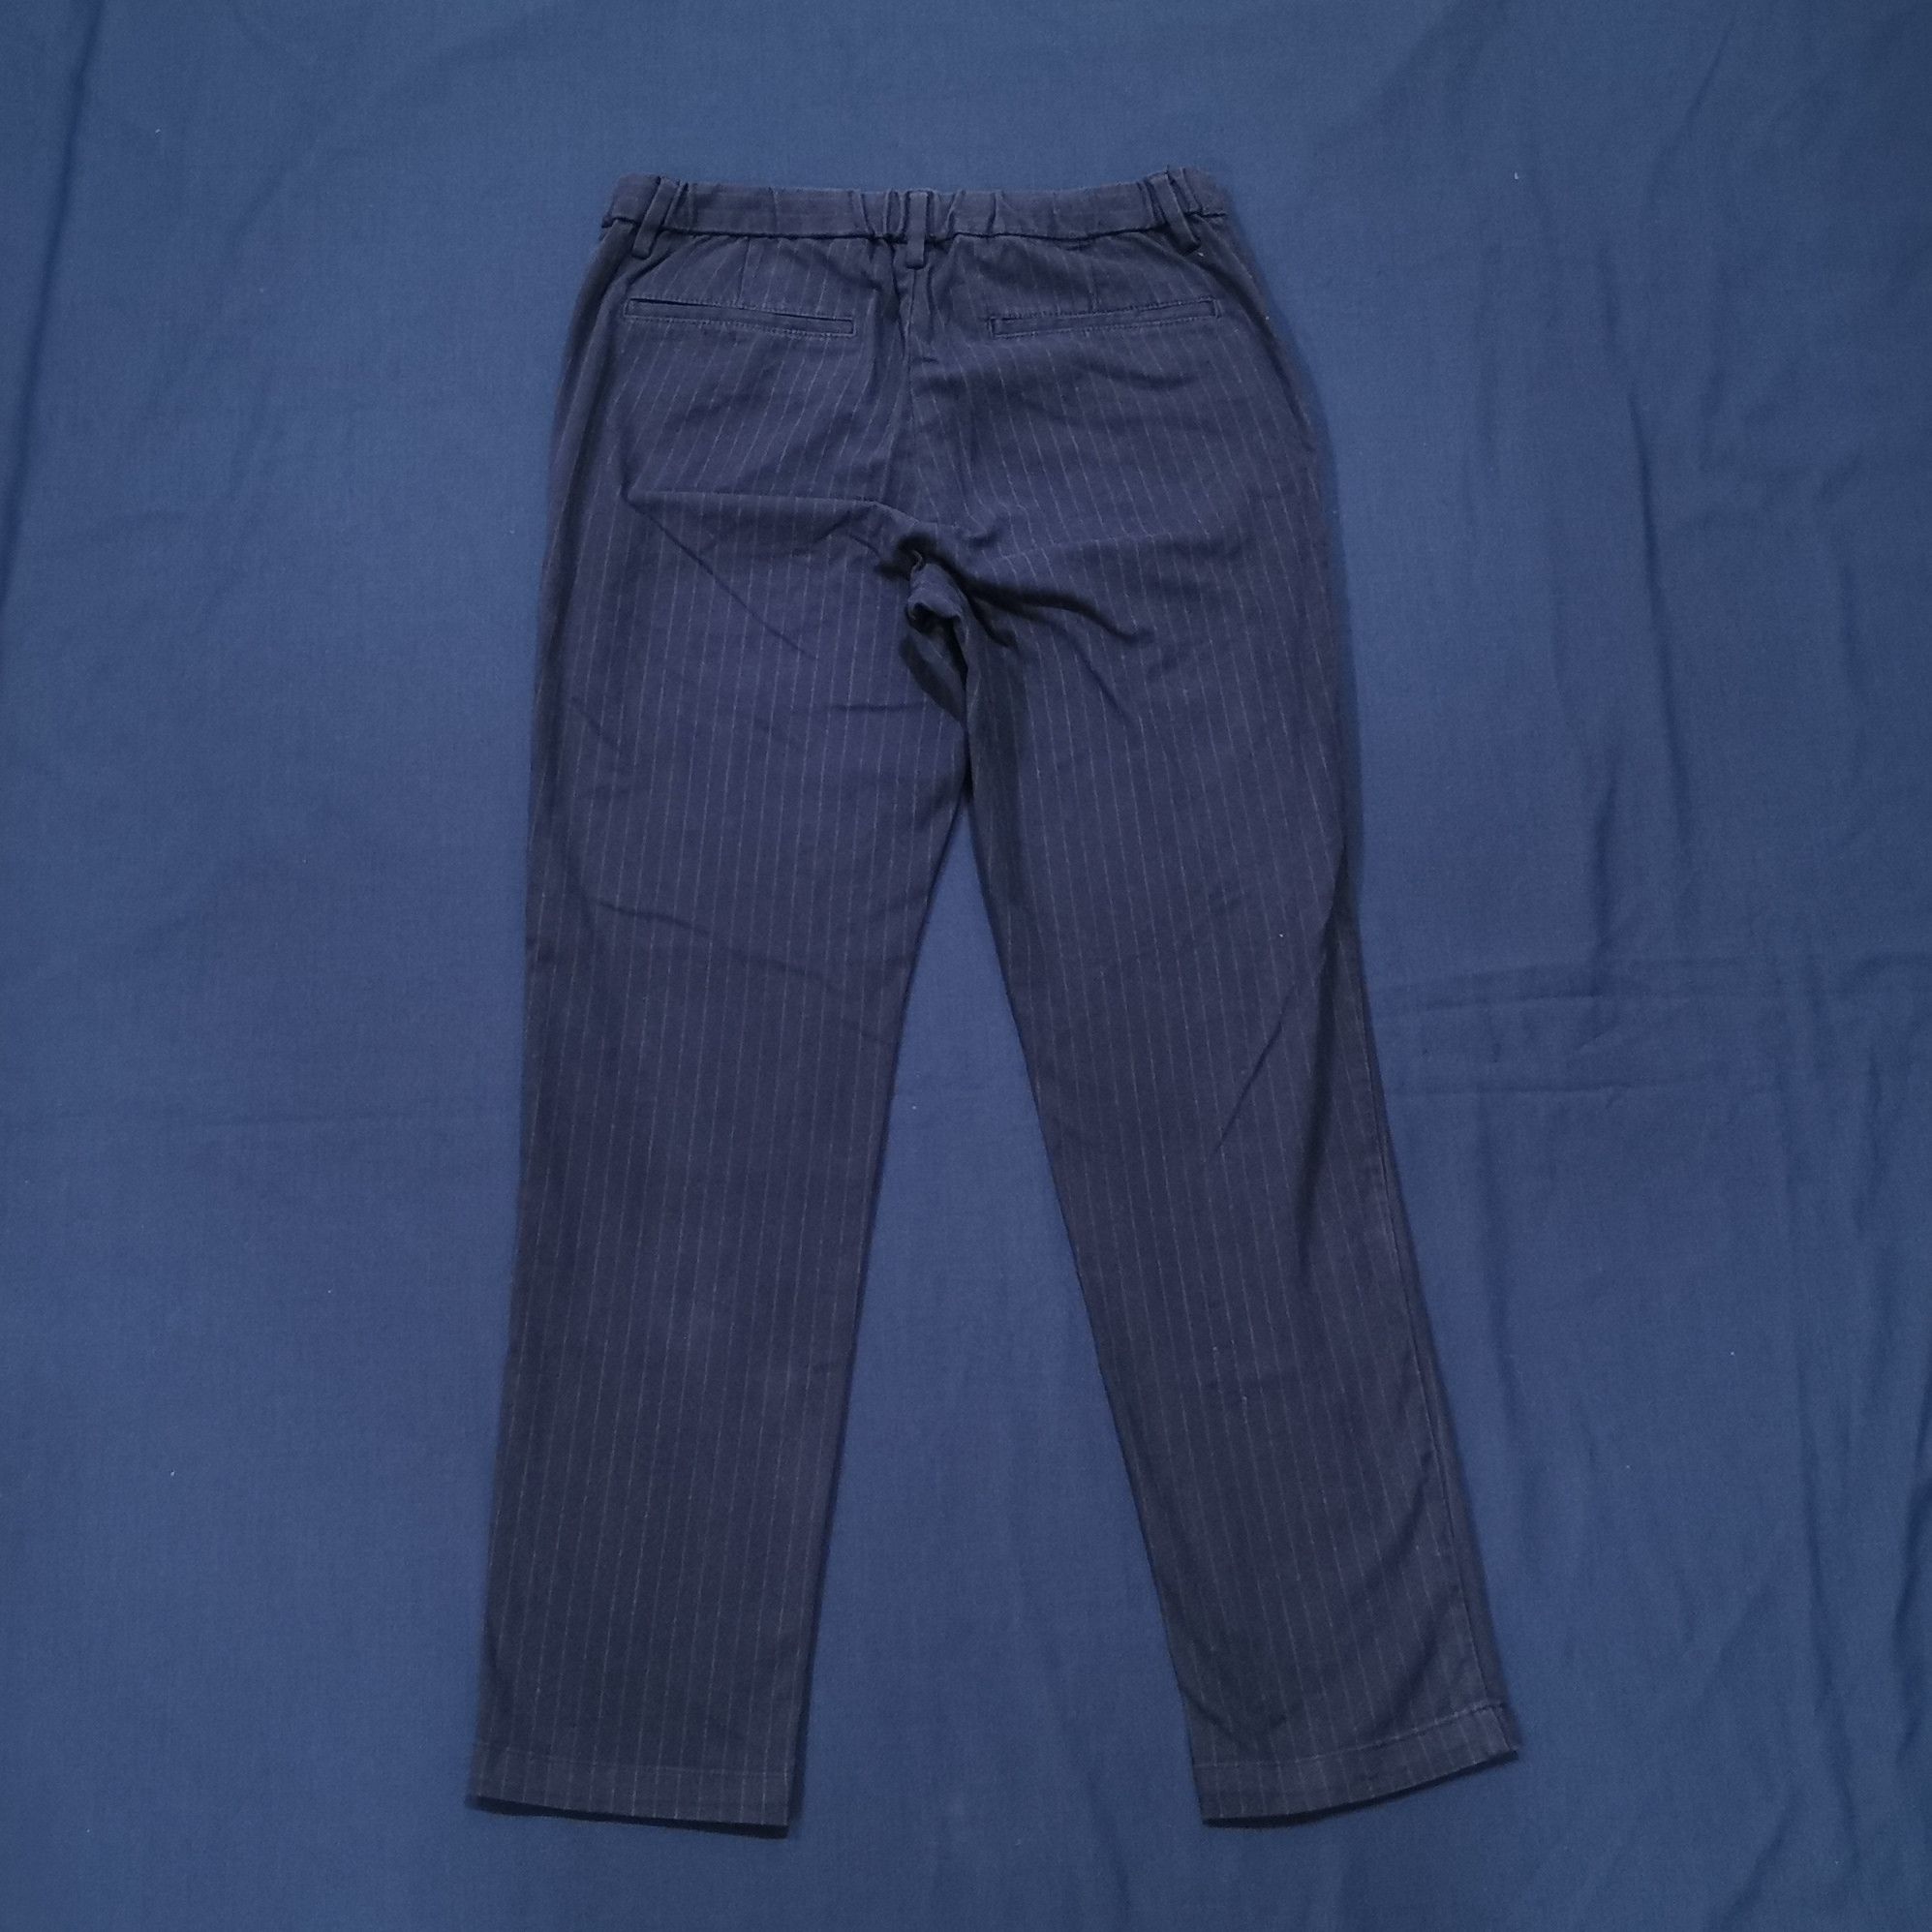 Uniqlo Casual Stripe Style Pants - 2